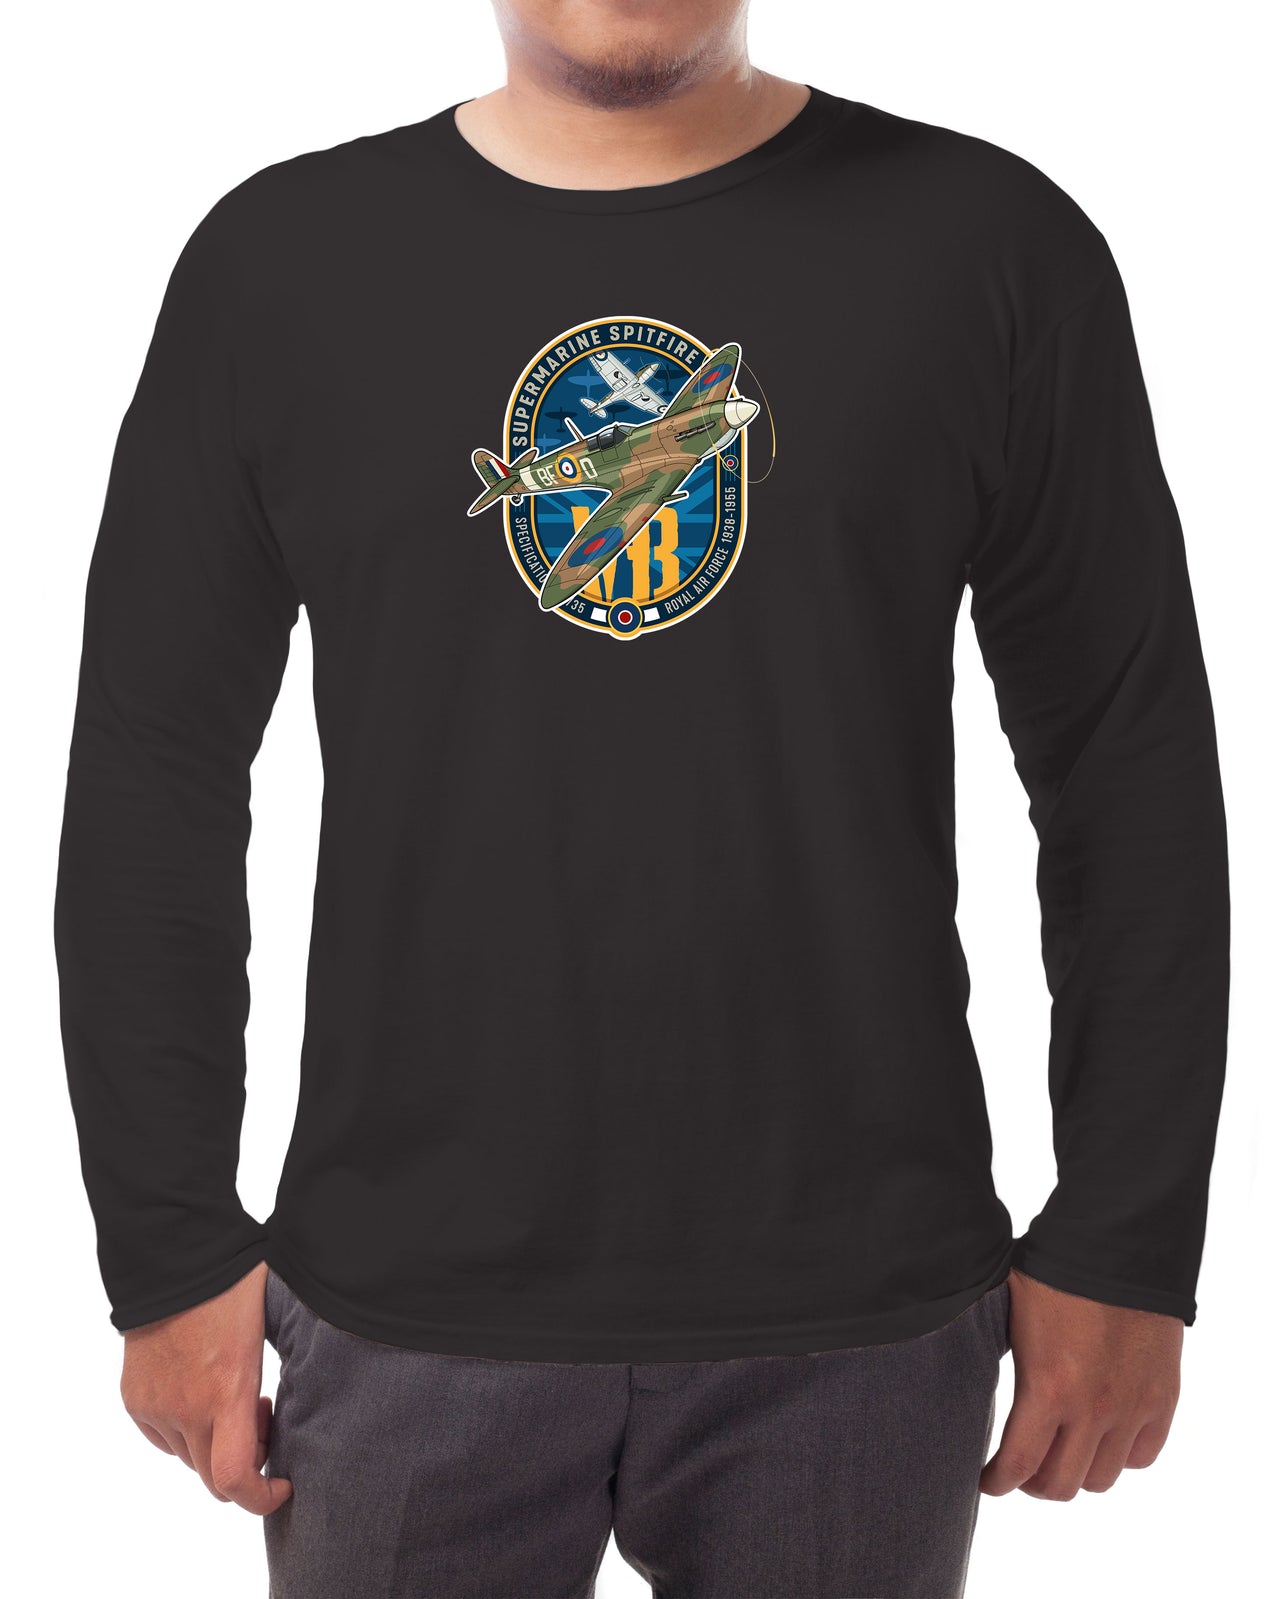 Supermarine Spitfire - Long-sleeve T-shirt